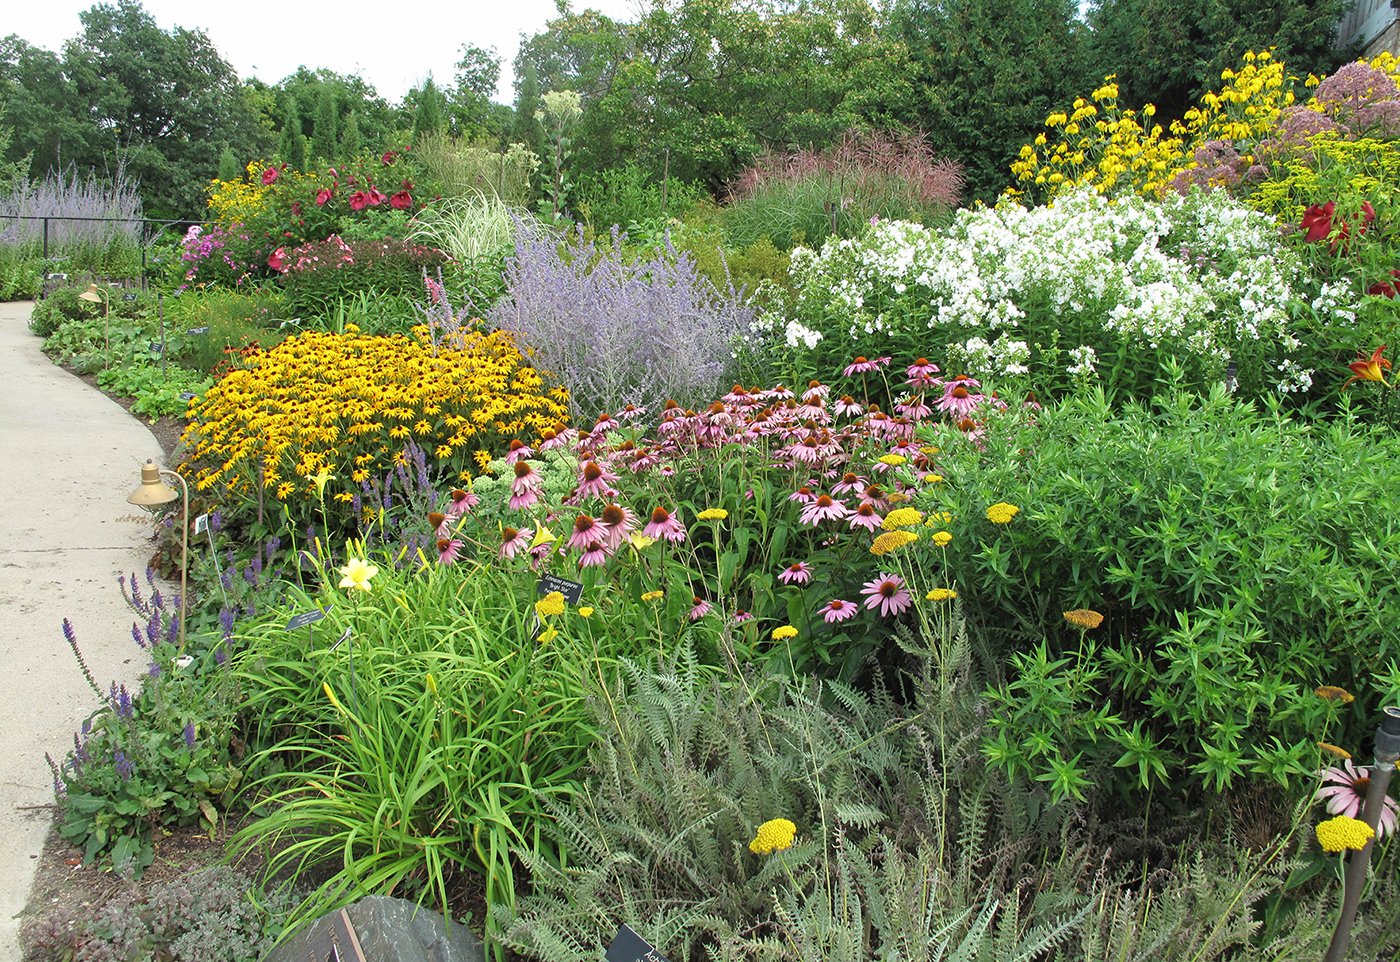 A variety of perennials in a botanical garden